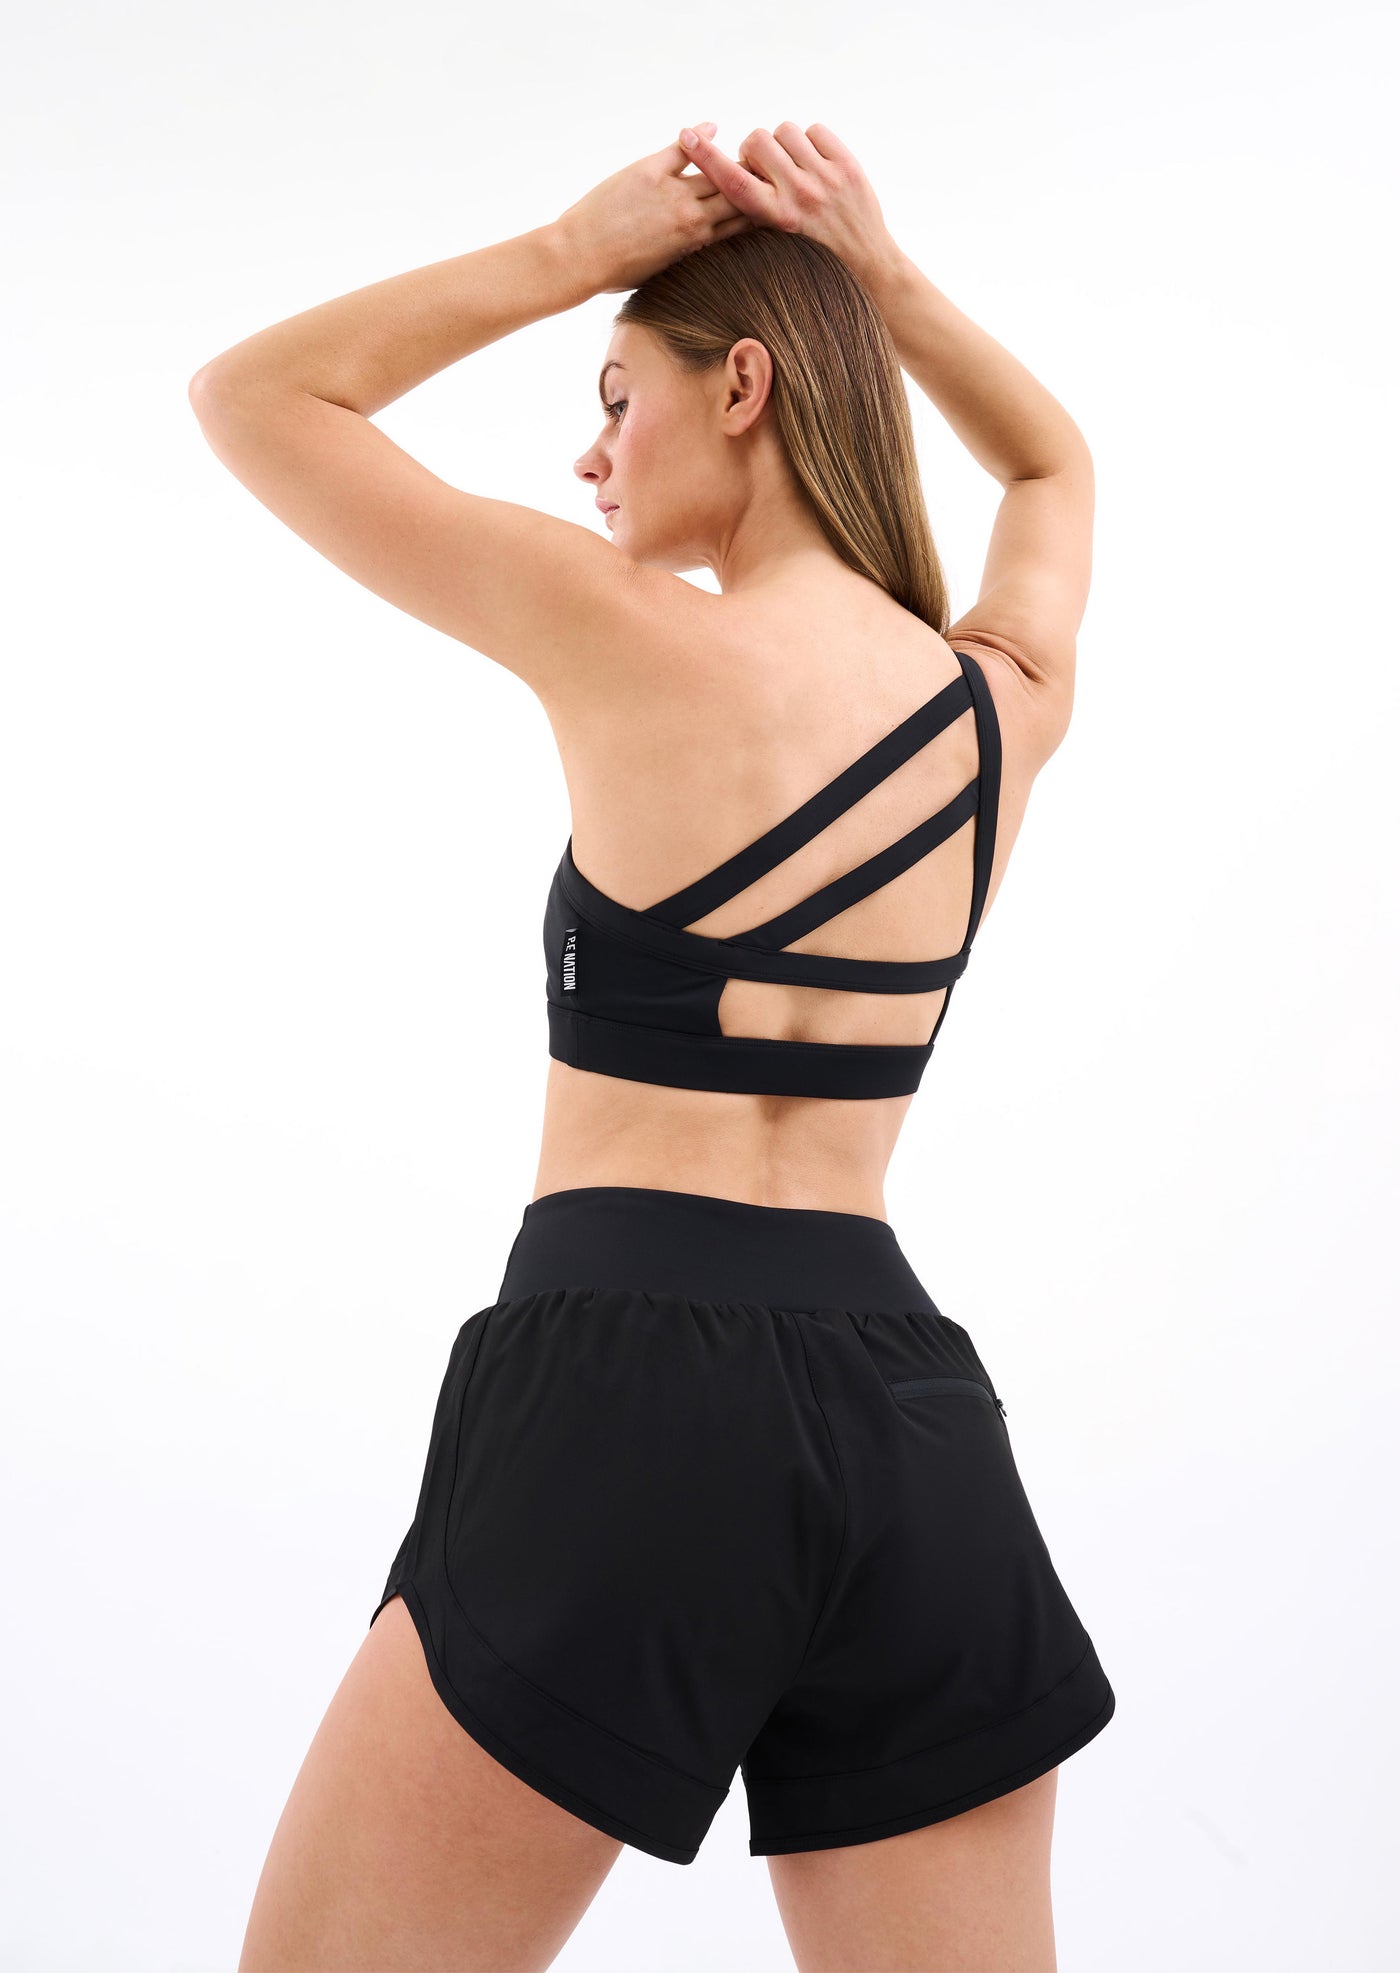 P.E Nation - LNDR Activewear Set (bra and tights) on Designer Wardrobe